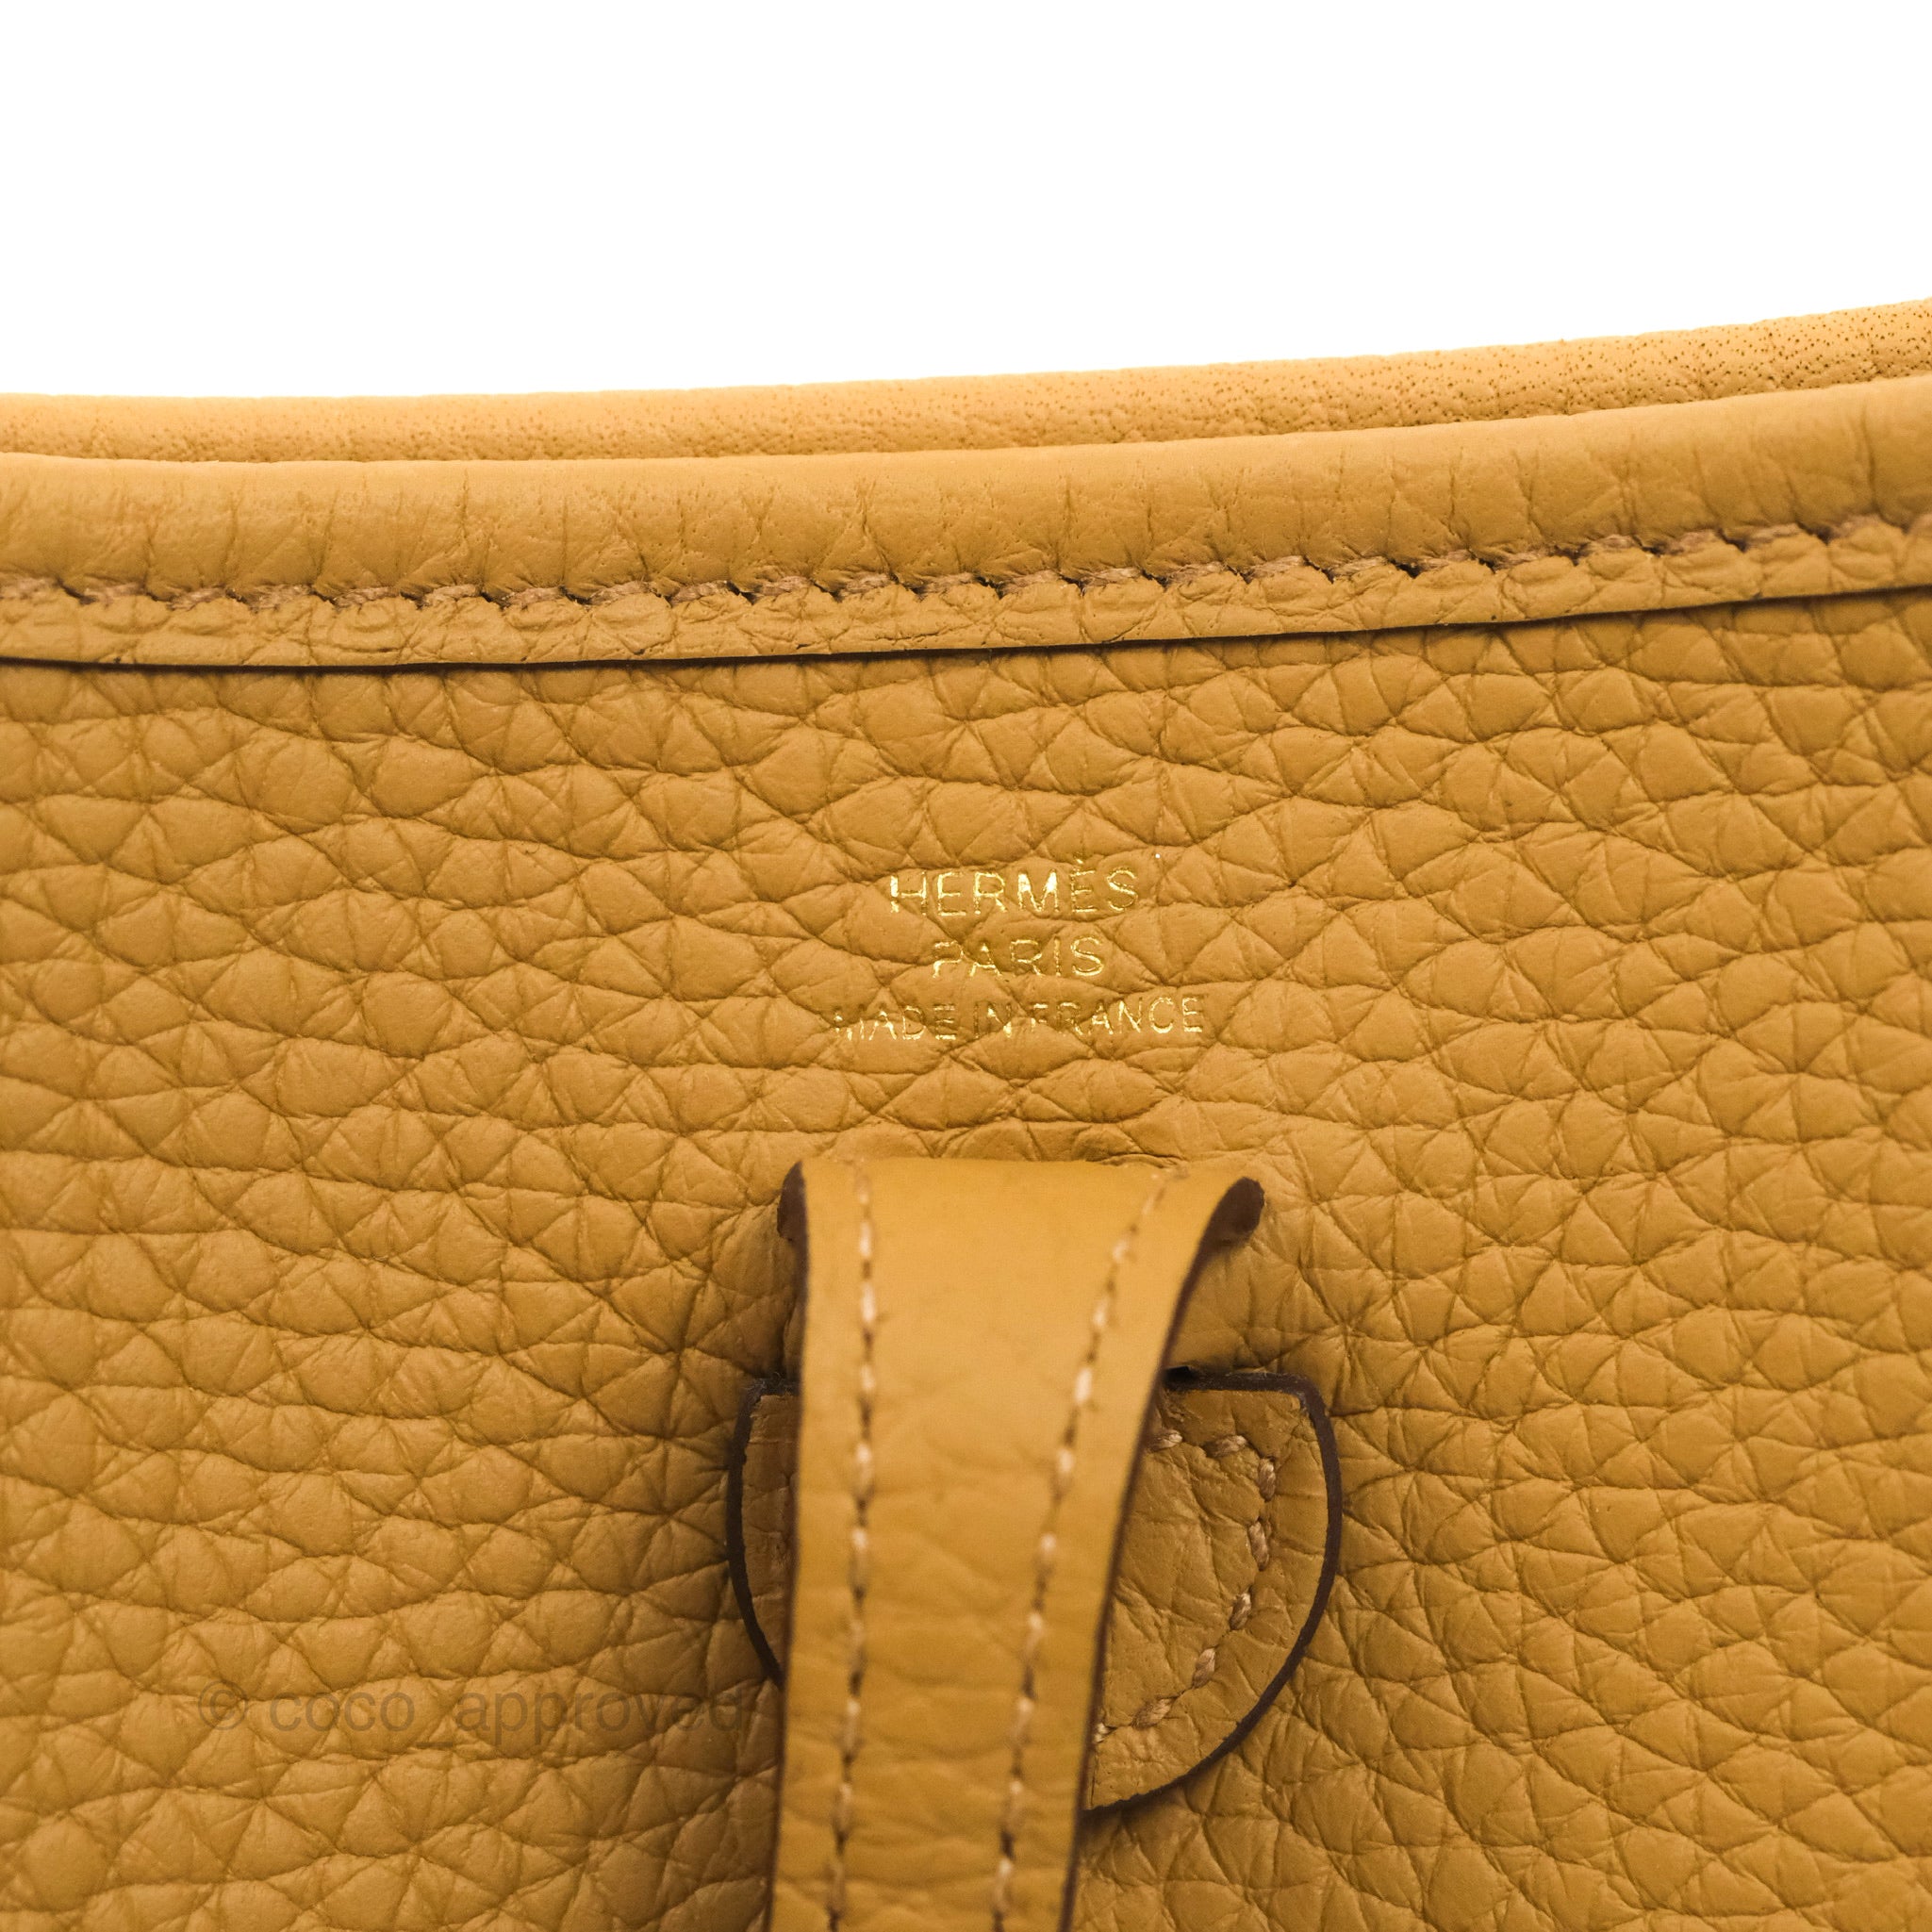 Hermès Mini Evelyne 16 Vert Rousseau/ Vert Cypress Clemence Gold Hardw –  Coco Approved Studio